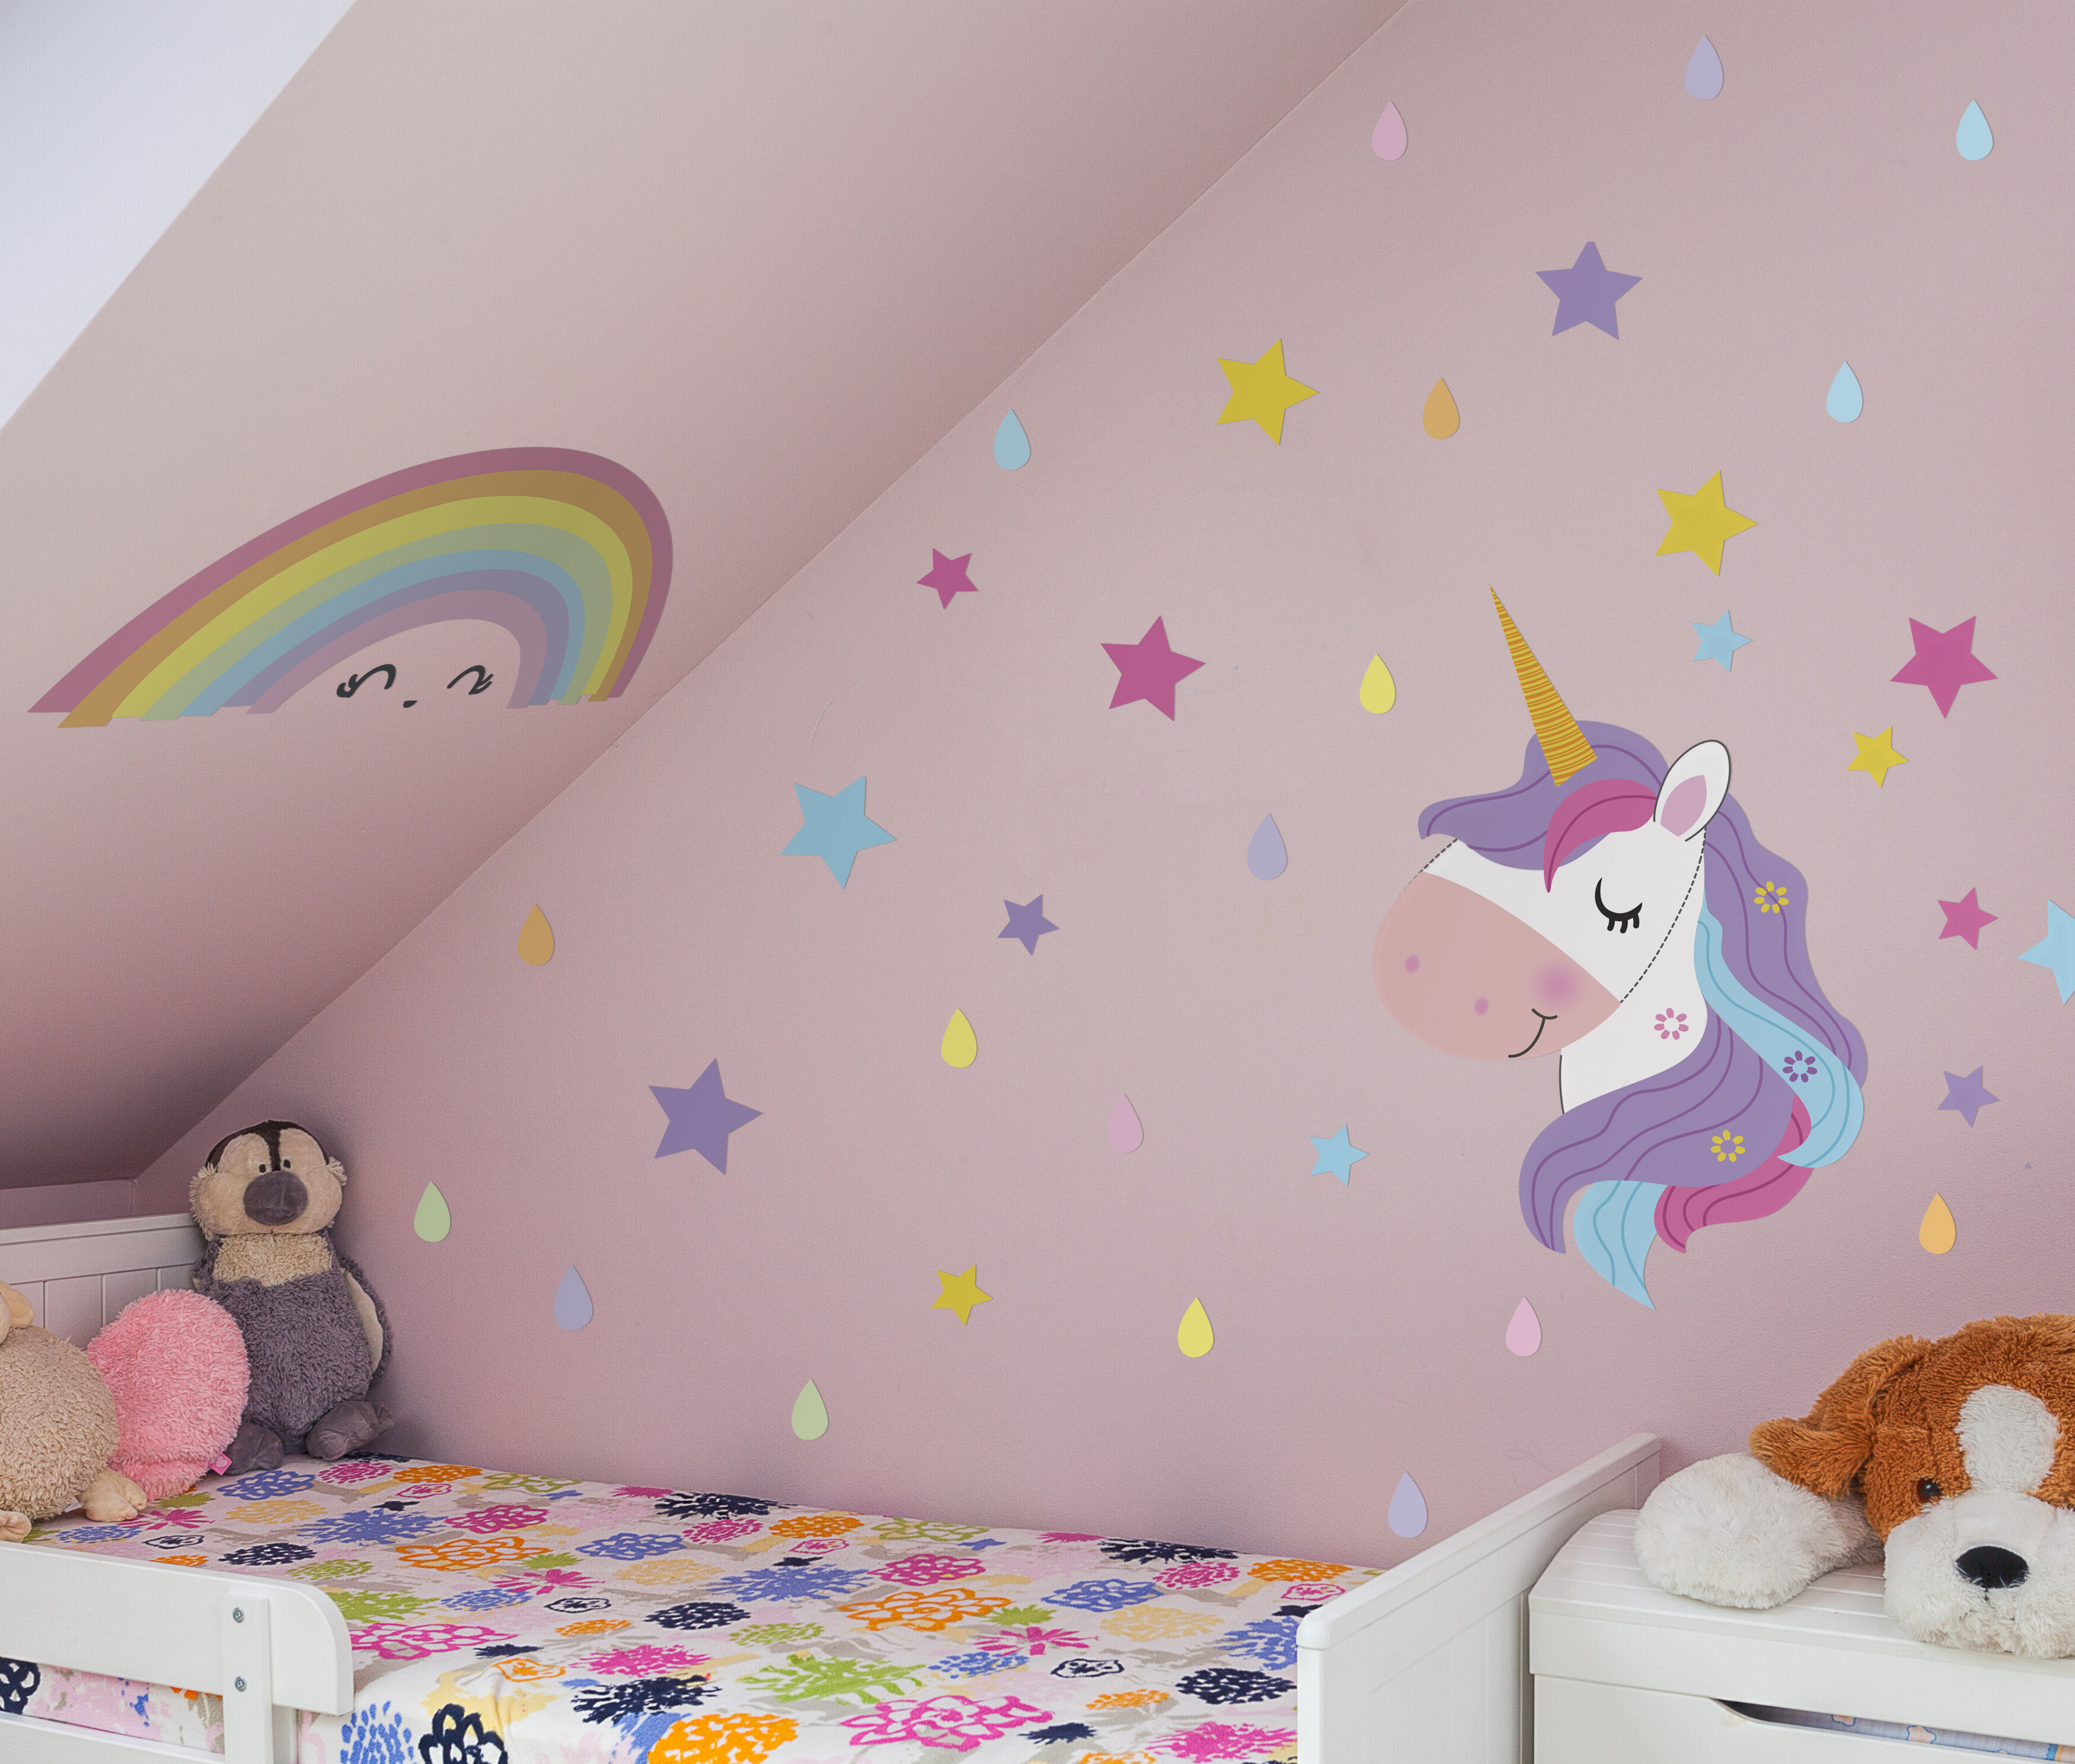 5 Magic Rainbow Unicorns Wall Stickers Decals Bedroom Fairy Fun Stars Animals